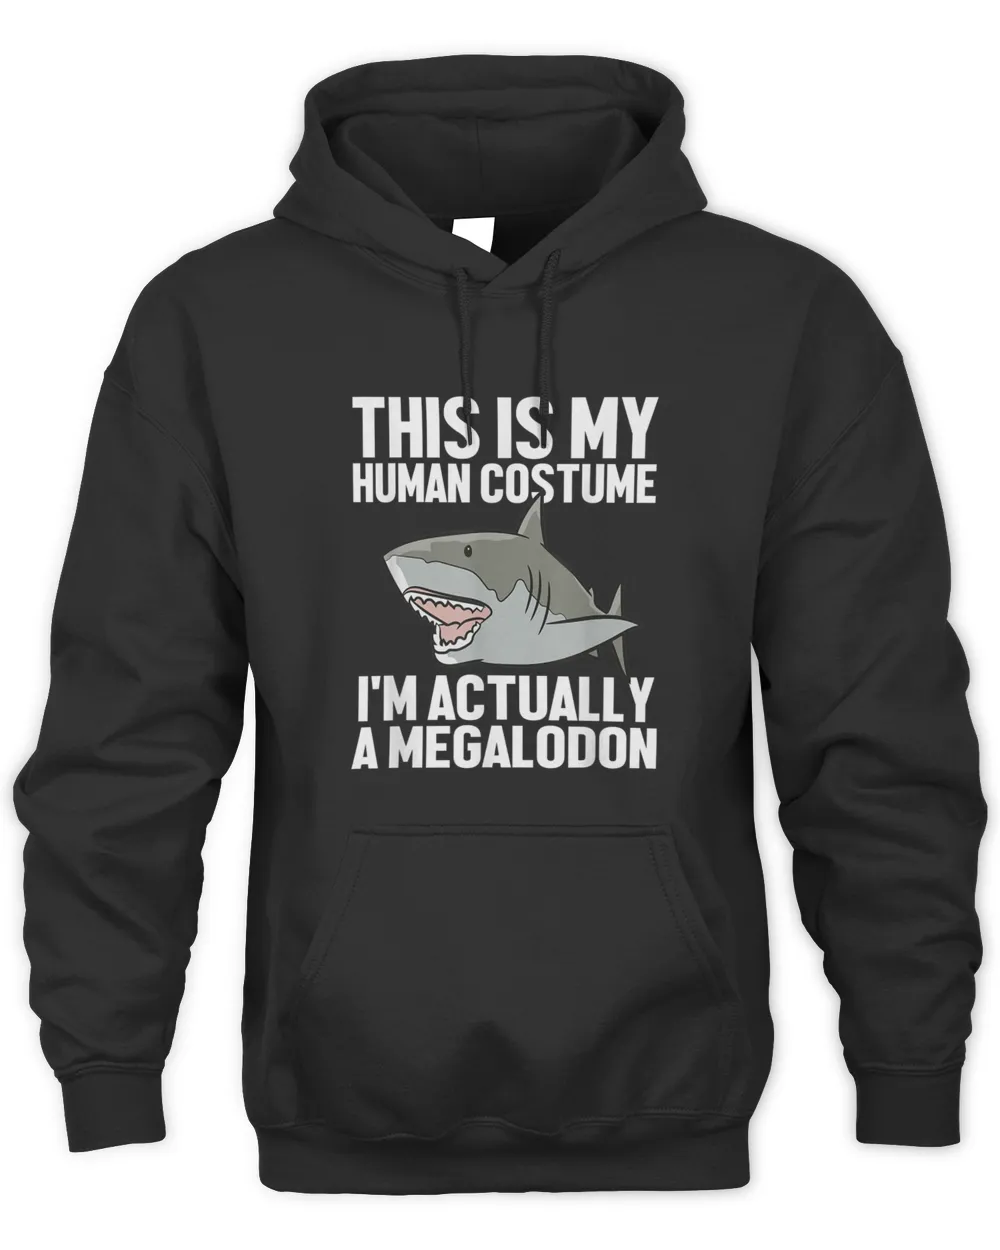 I'm Really A Megalon